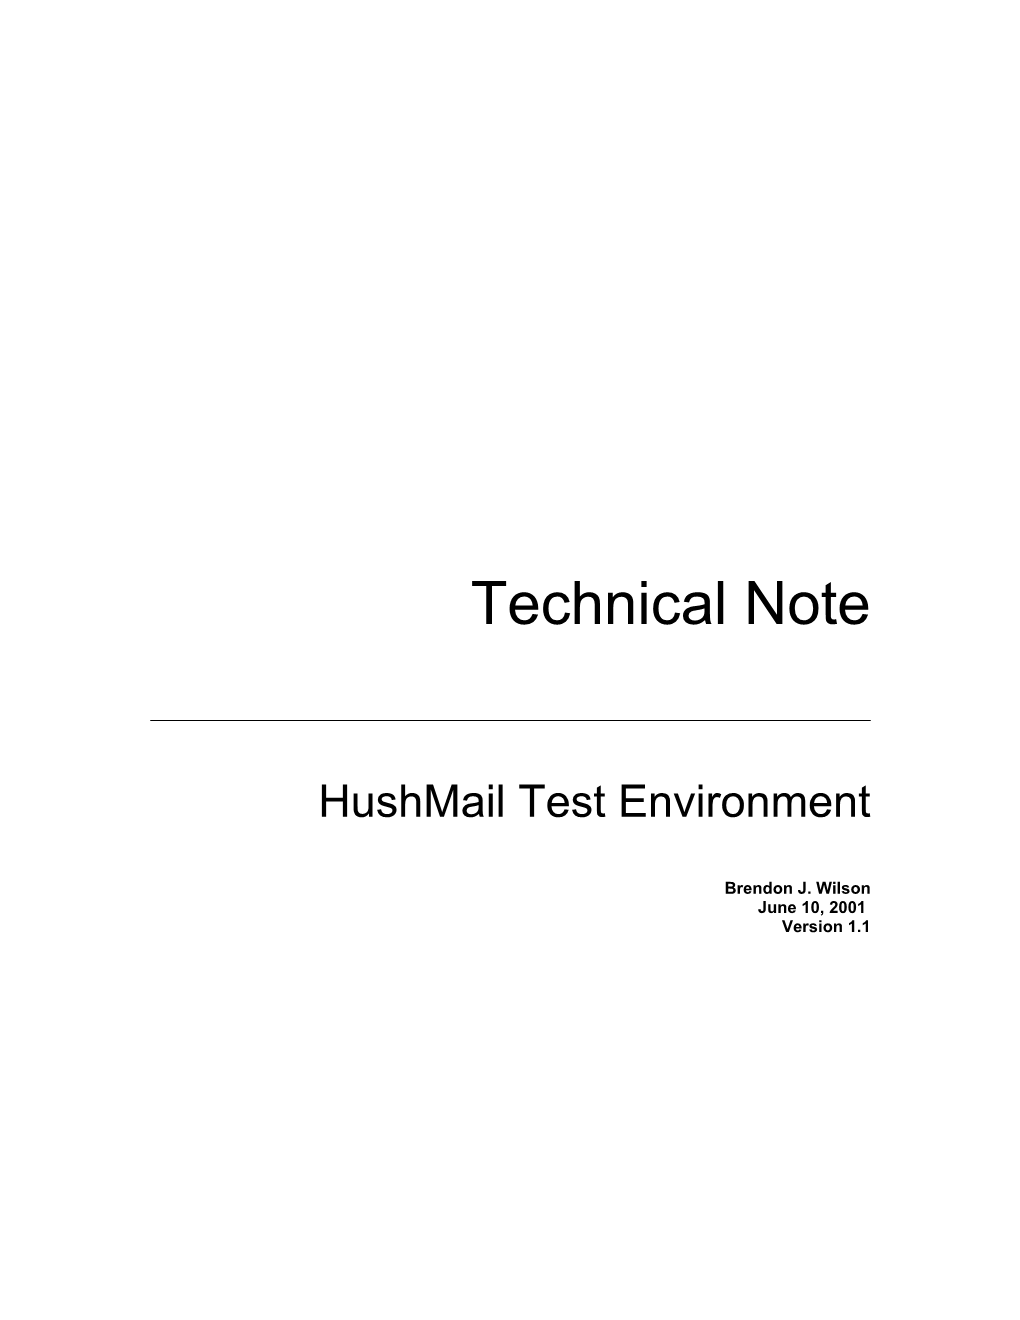 Hushmail Test Environment